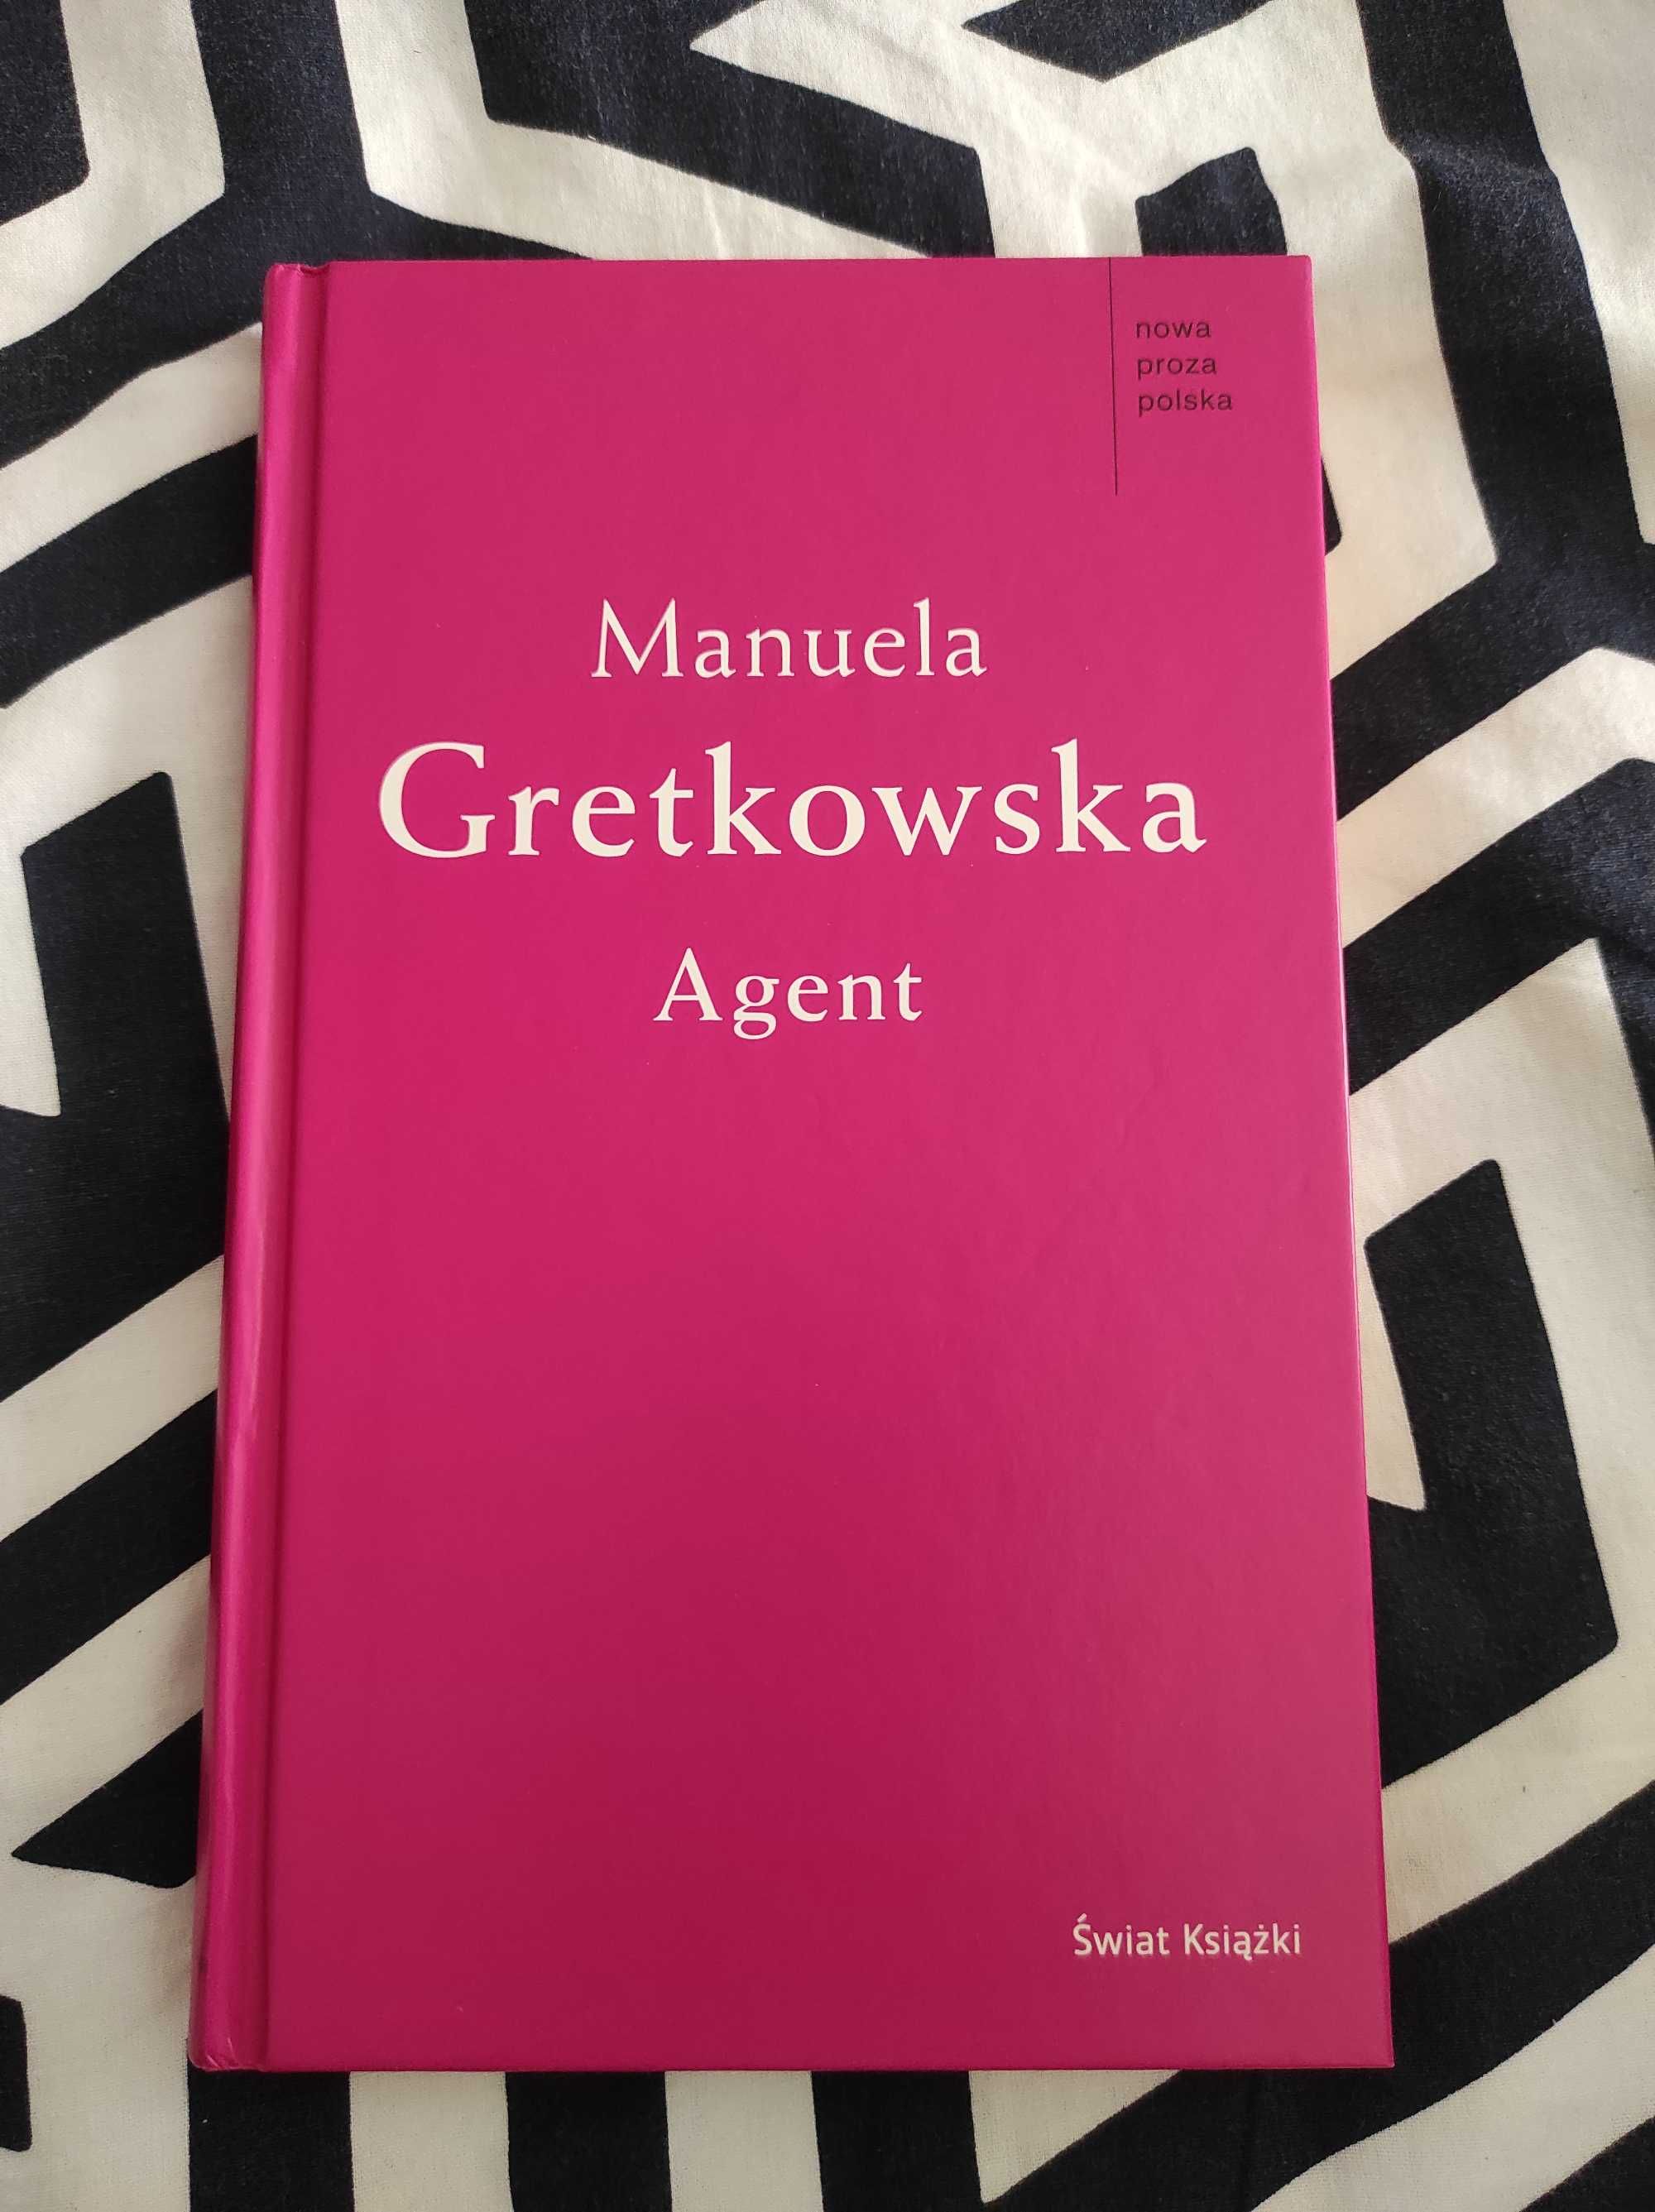 "Agent" Manuela Gretkowska